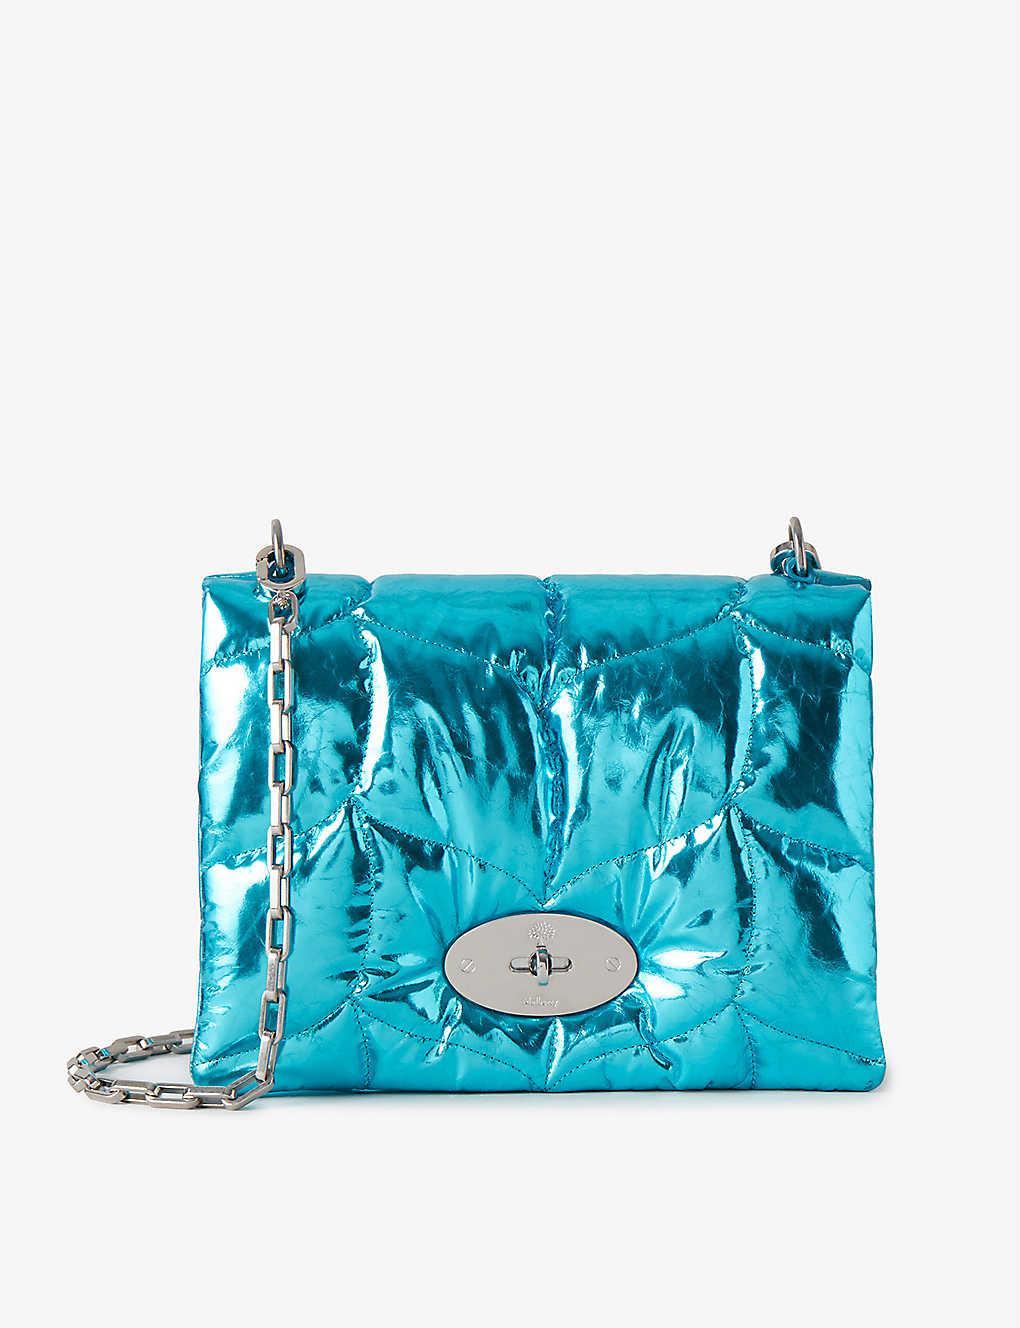 Mulberry Little Softie Metallic Leather Cross-body Bag in Blue | Lyst